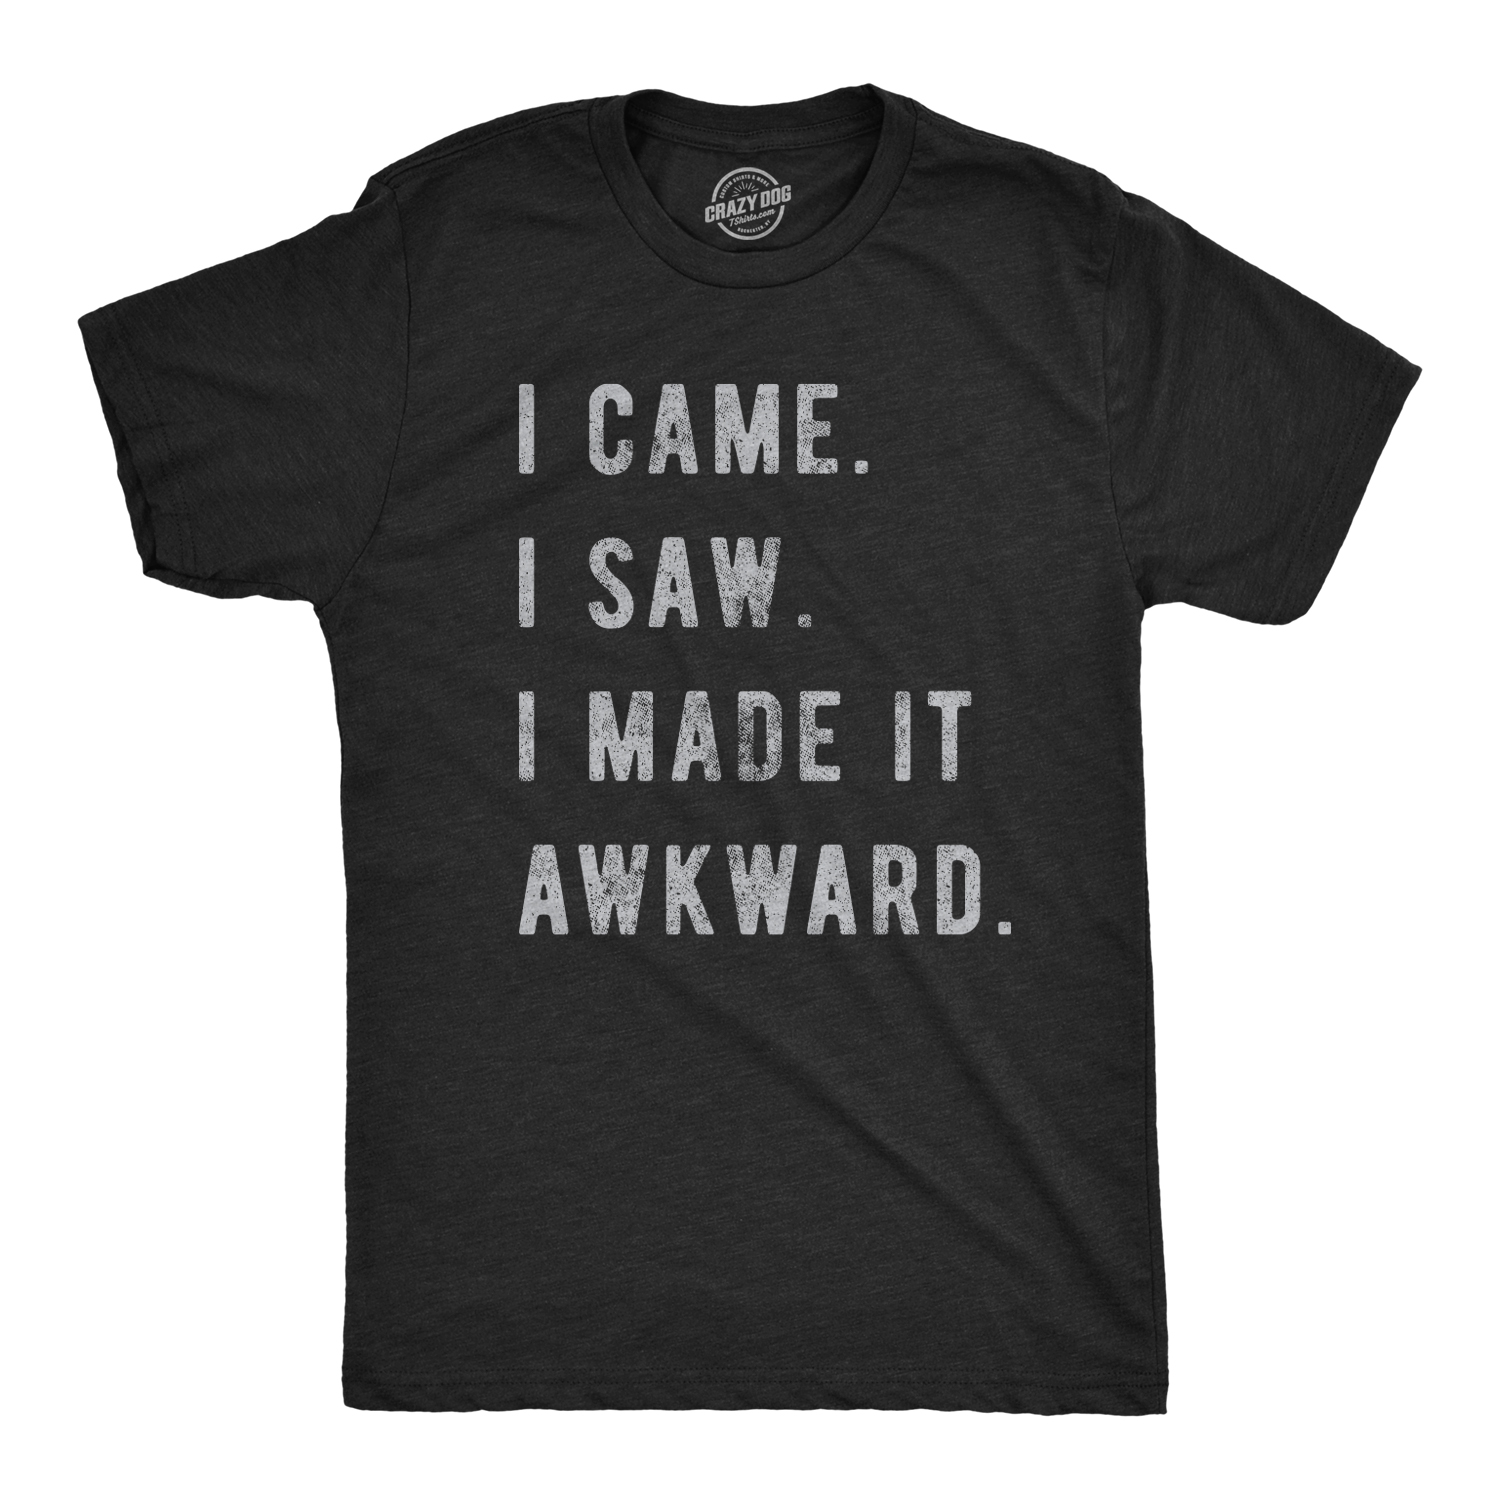 Crazy Dog Tshirts Mens I Came I Saw I Made It Awkward T shirt Funny Saying Sarcasm Gift for Him